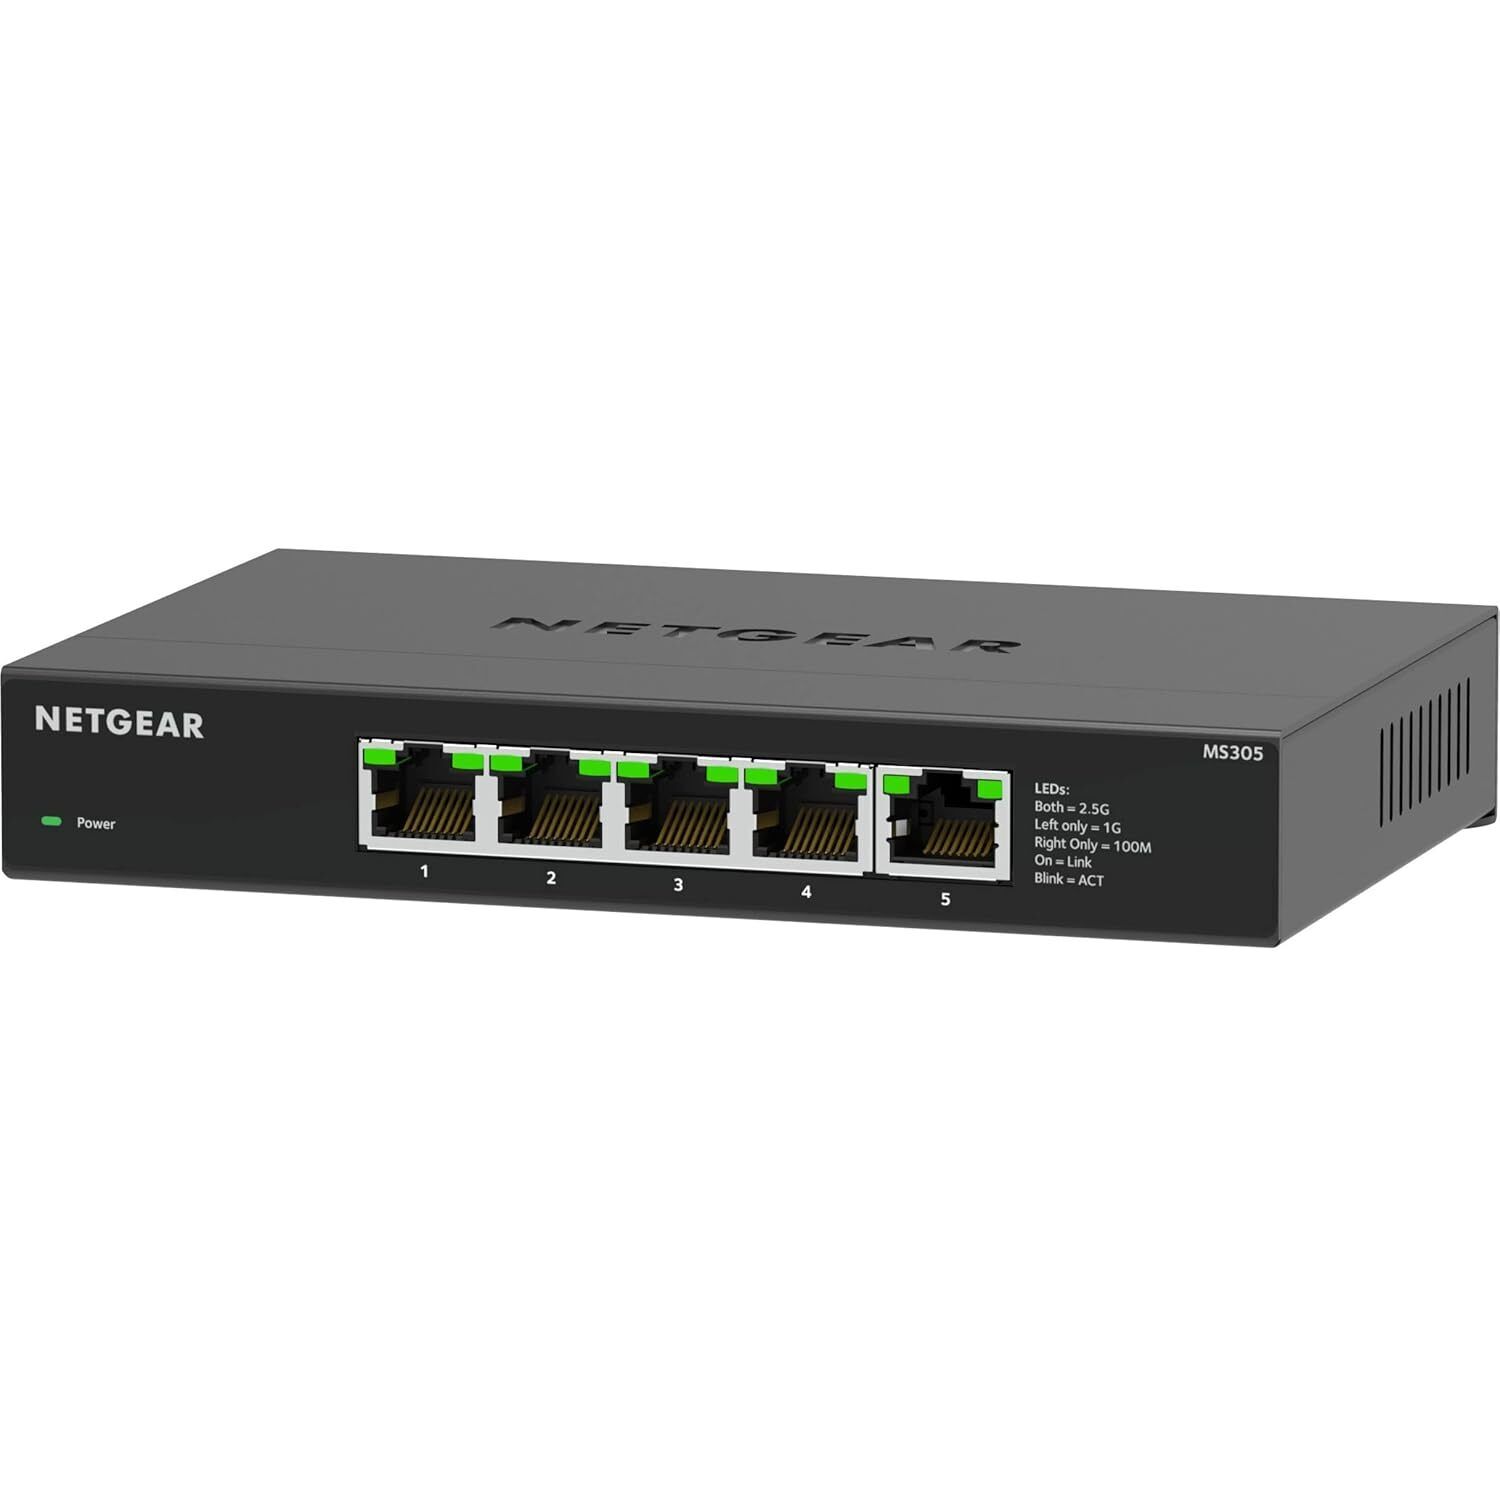 NETGEAR 5-Port Multi-Gigabit Ethernet Unmanaged Network Switch (MS305) - with